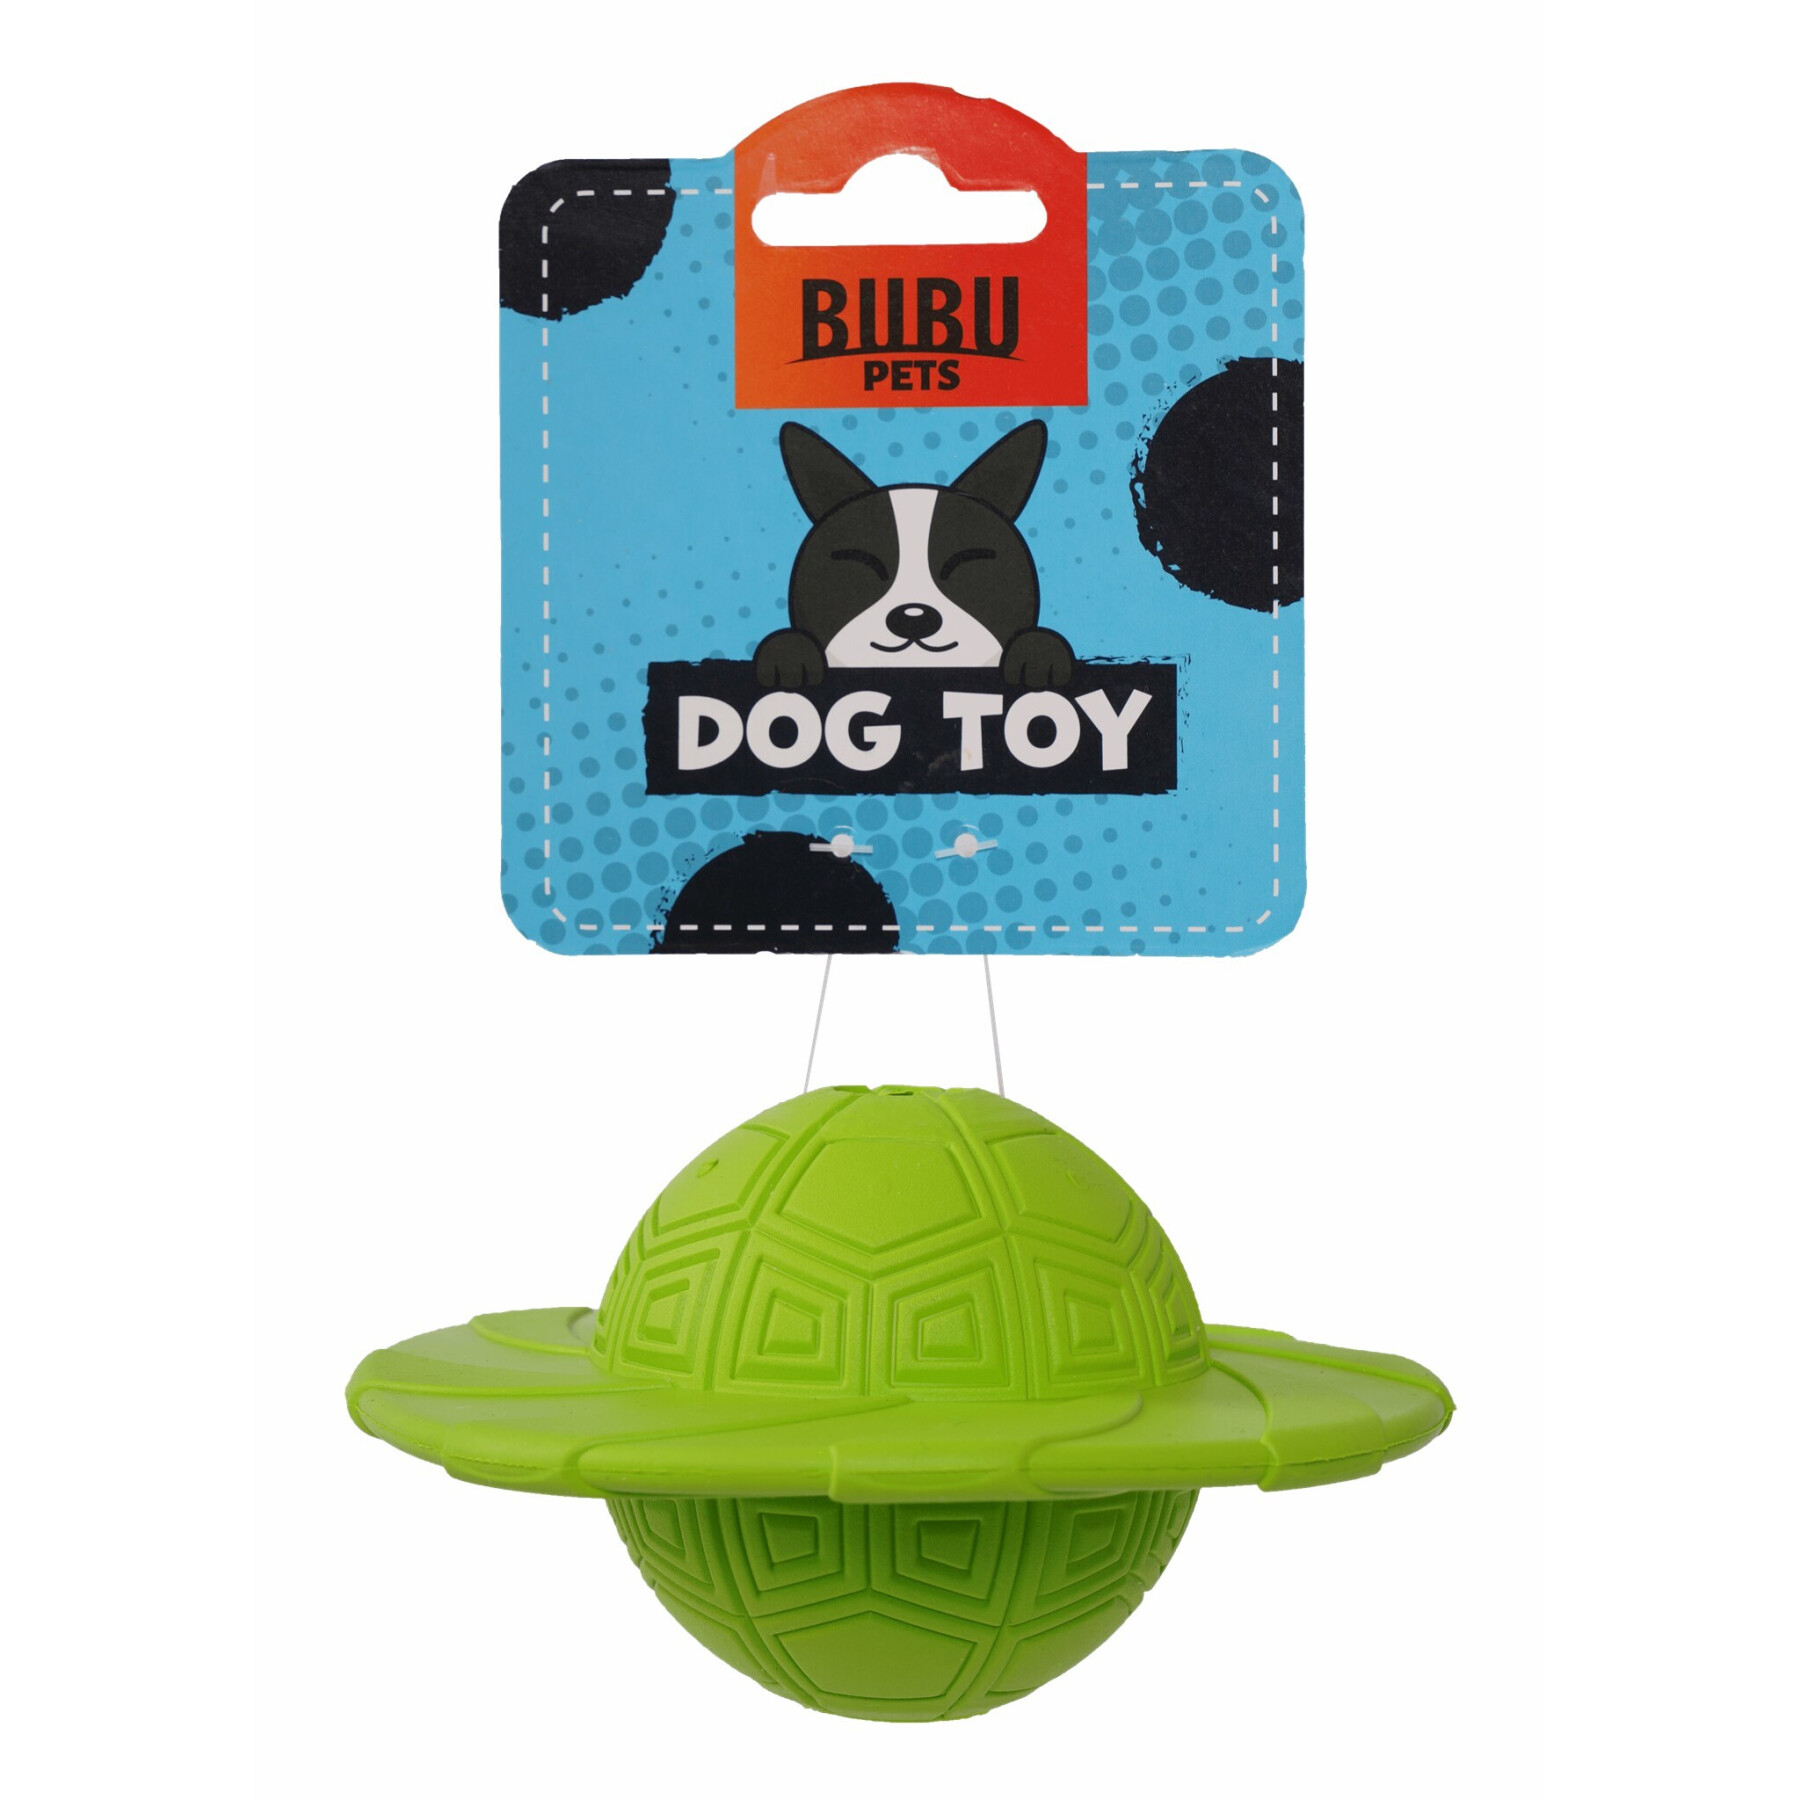 Juguete para perro pelota mordisqueable de goma BUBU Pets